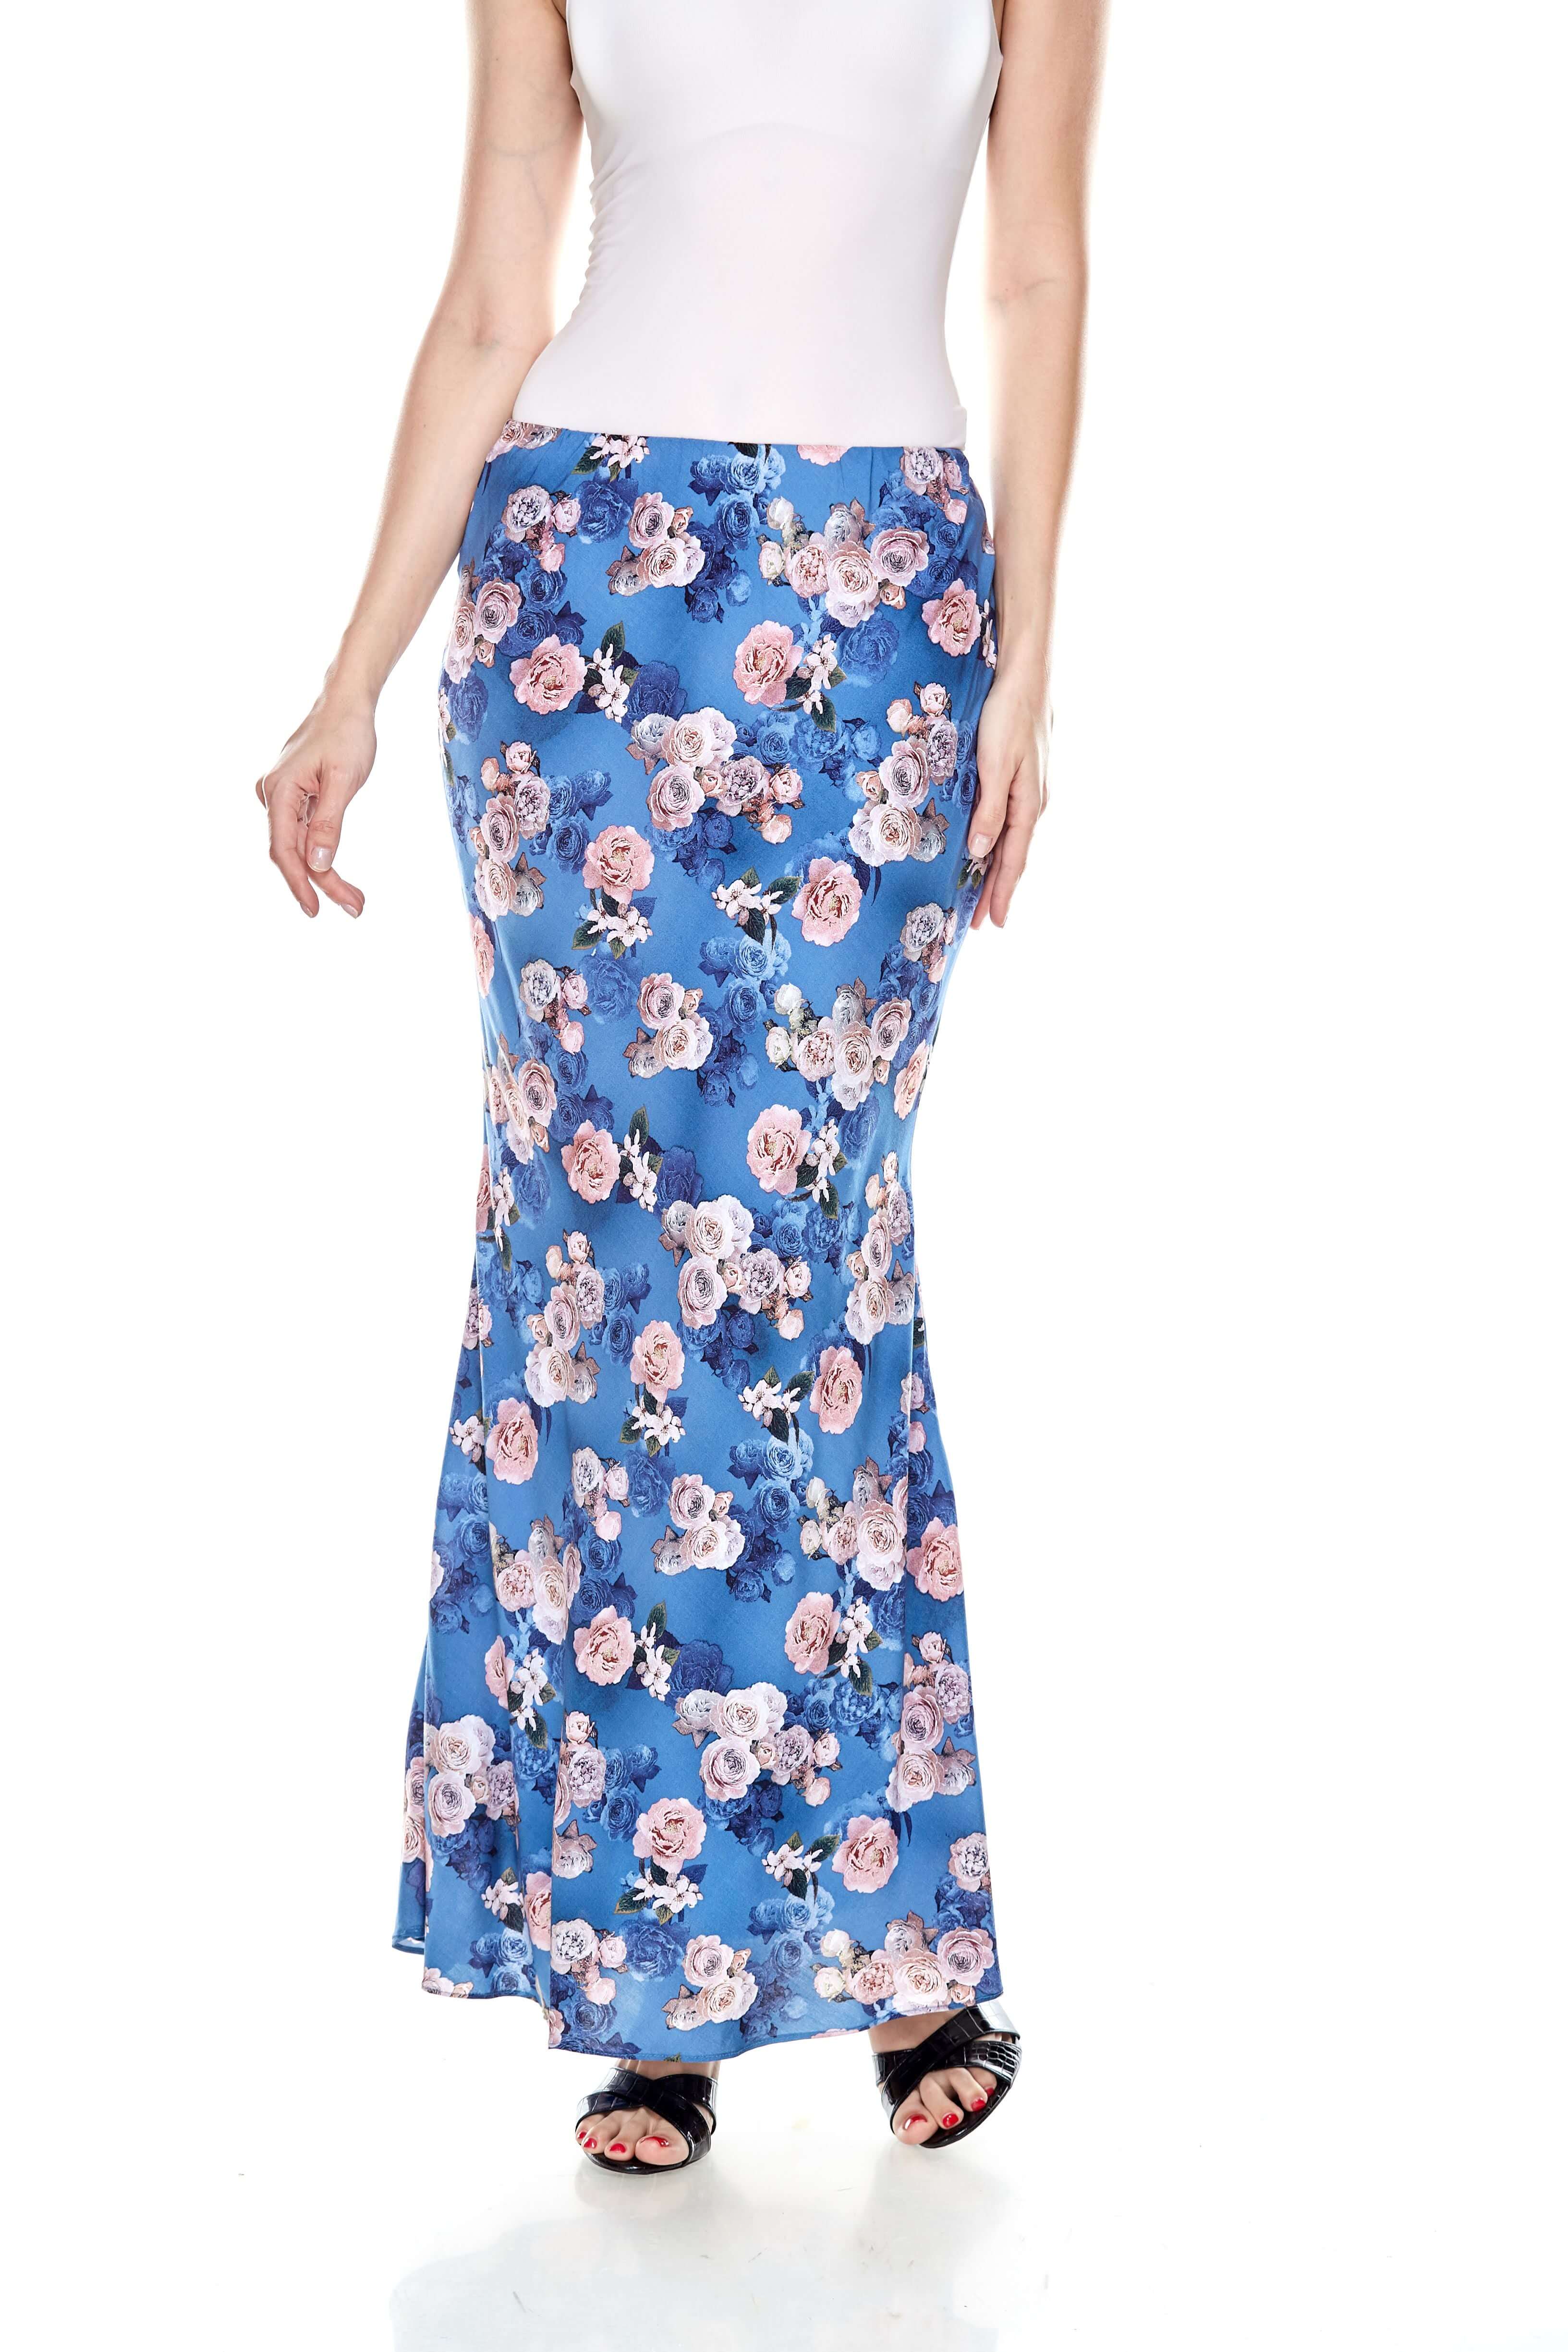 Blue Rose Mermaid Skirt